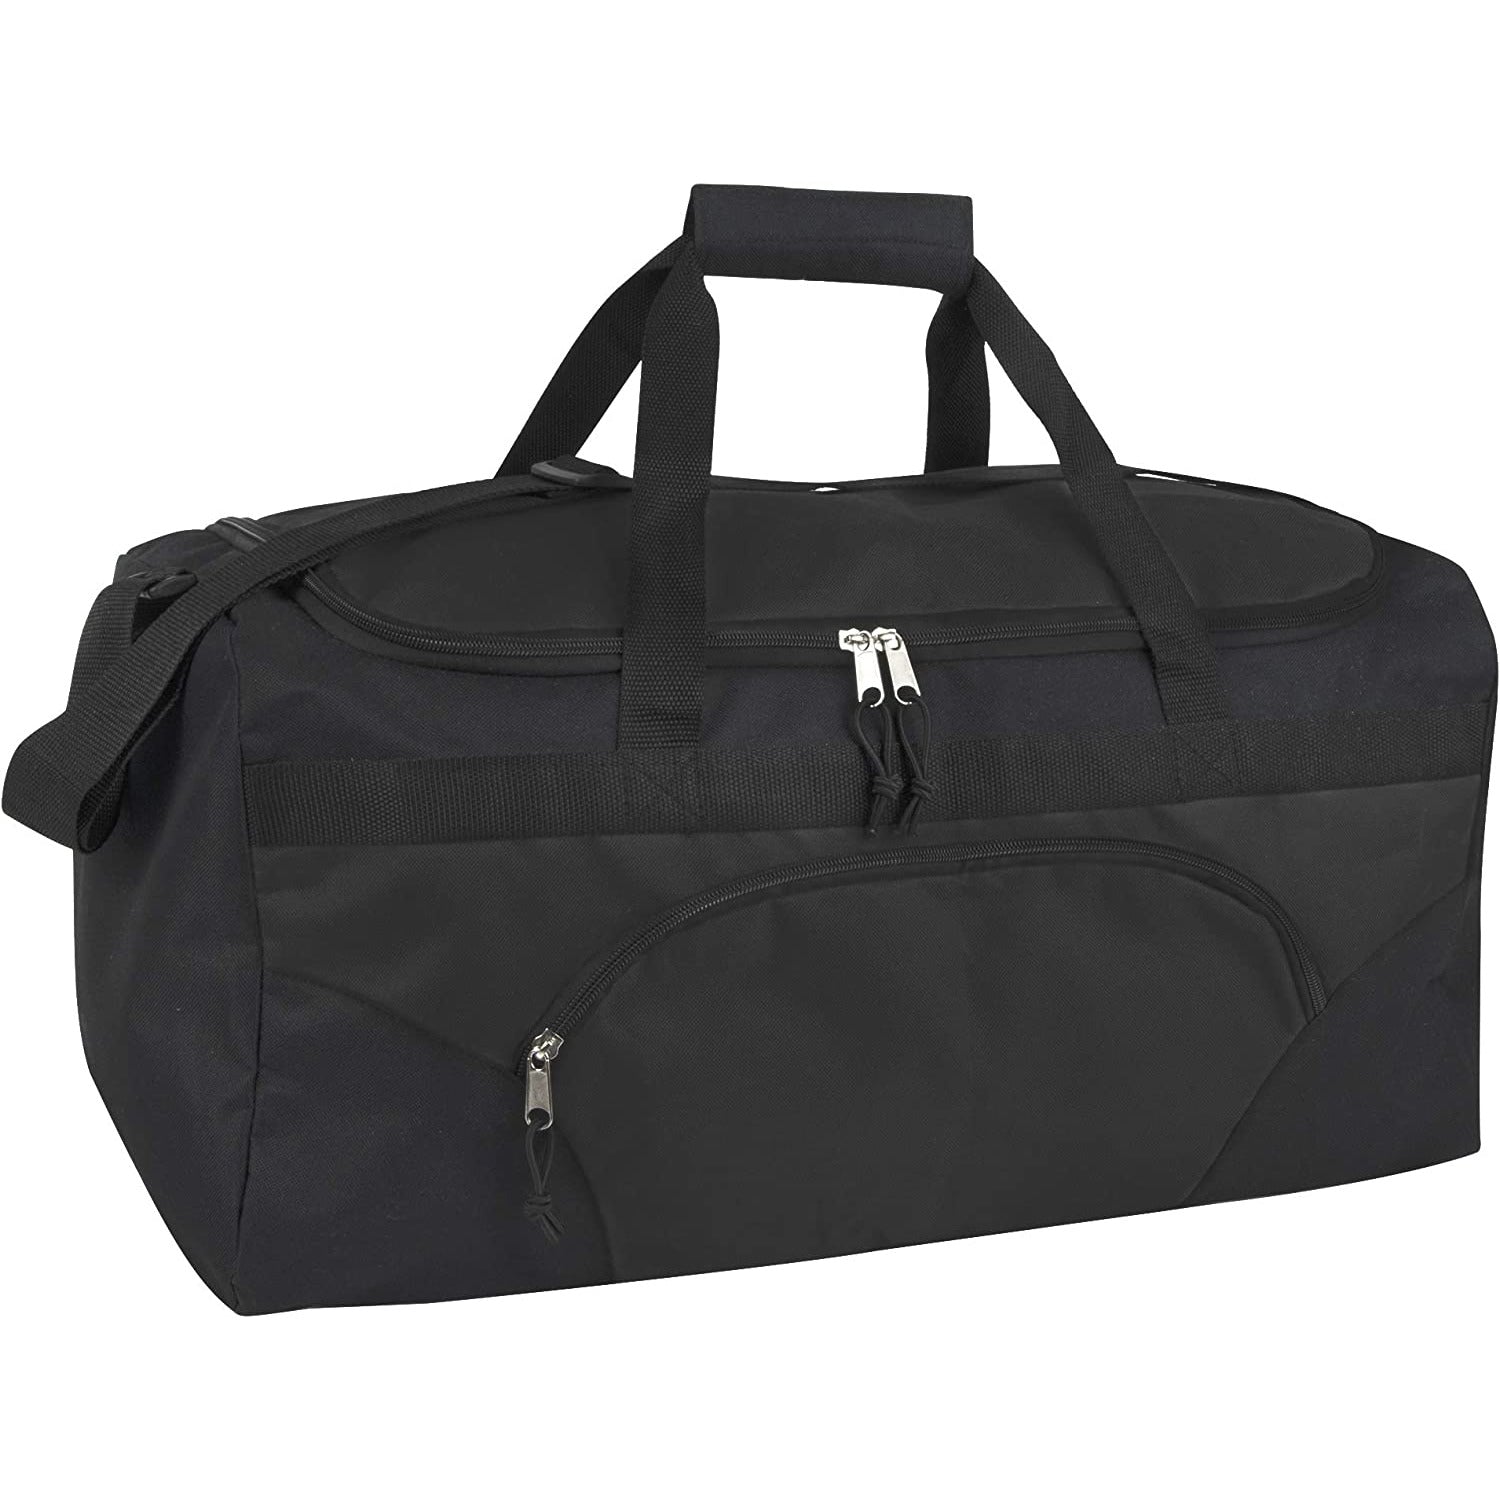 Wholesale Duffel Bags Large Small, Cheap Duffle Bags, Gym Duffle Bags